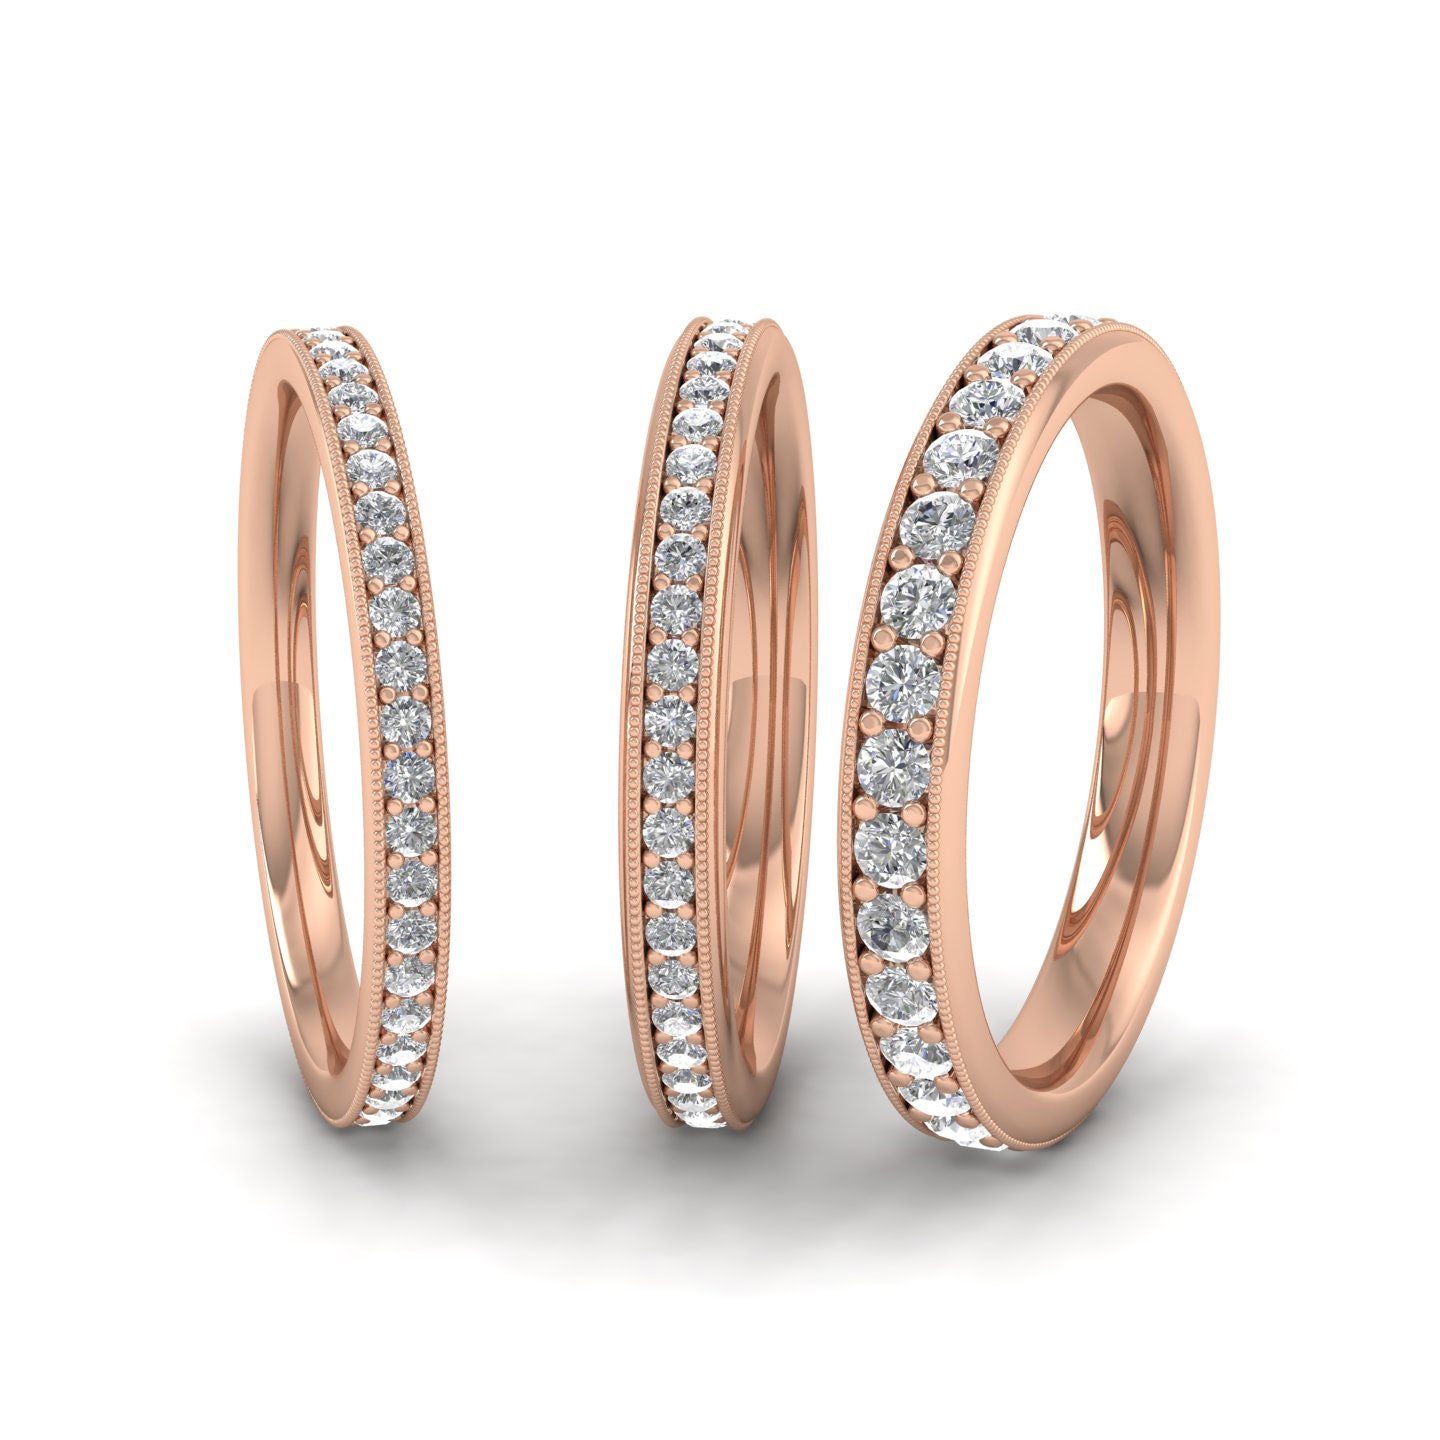 Full Bead Set 0.7ct Round Brilliant Cut Diamond With Millgrain Surround 18ct Rose Gold 2.5mm Wedding Ring